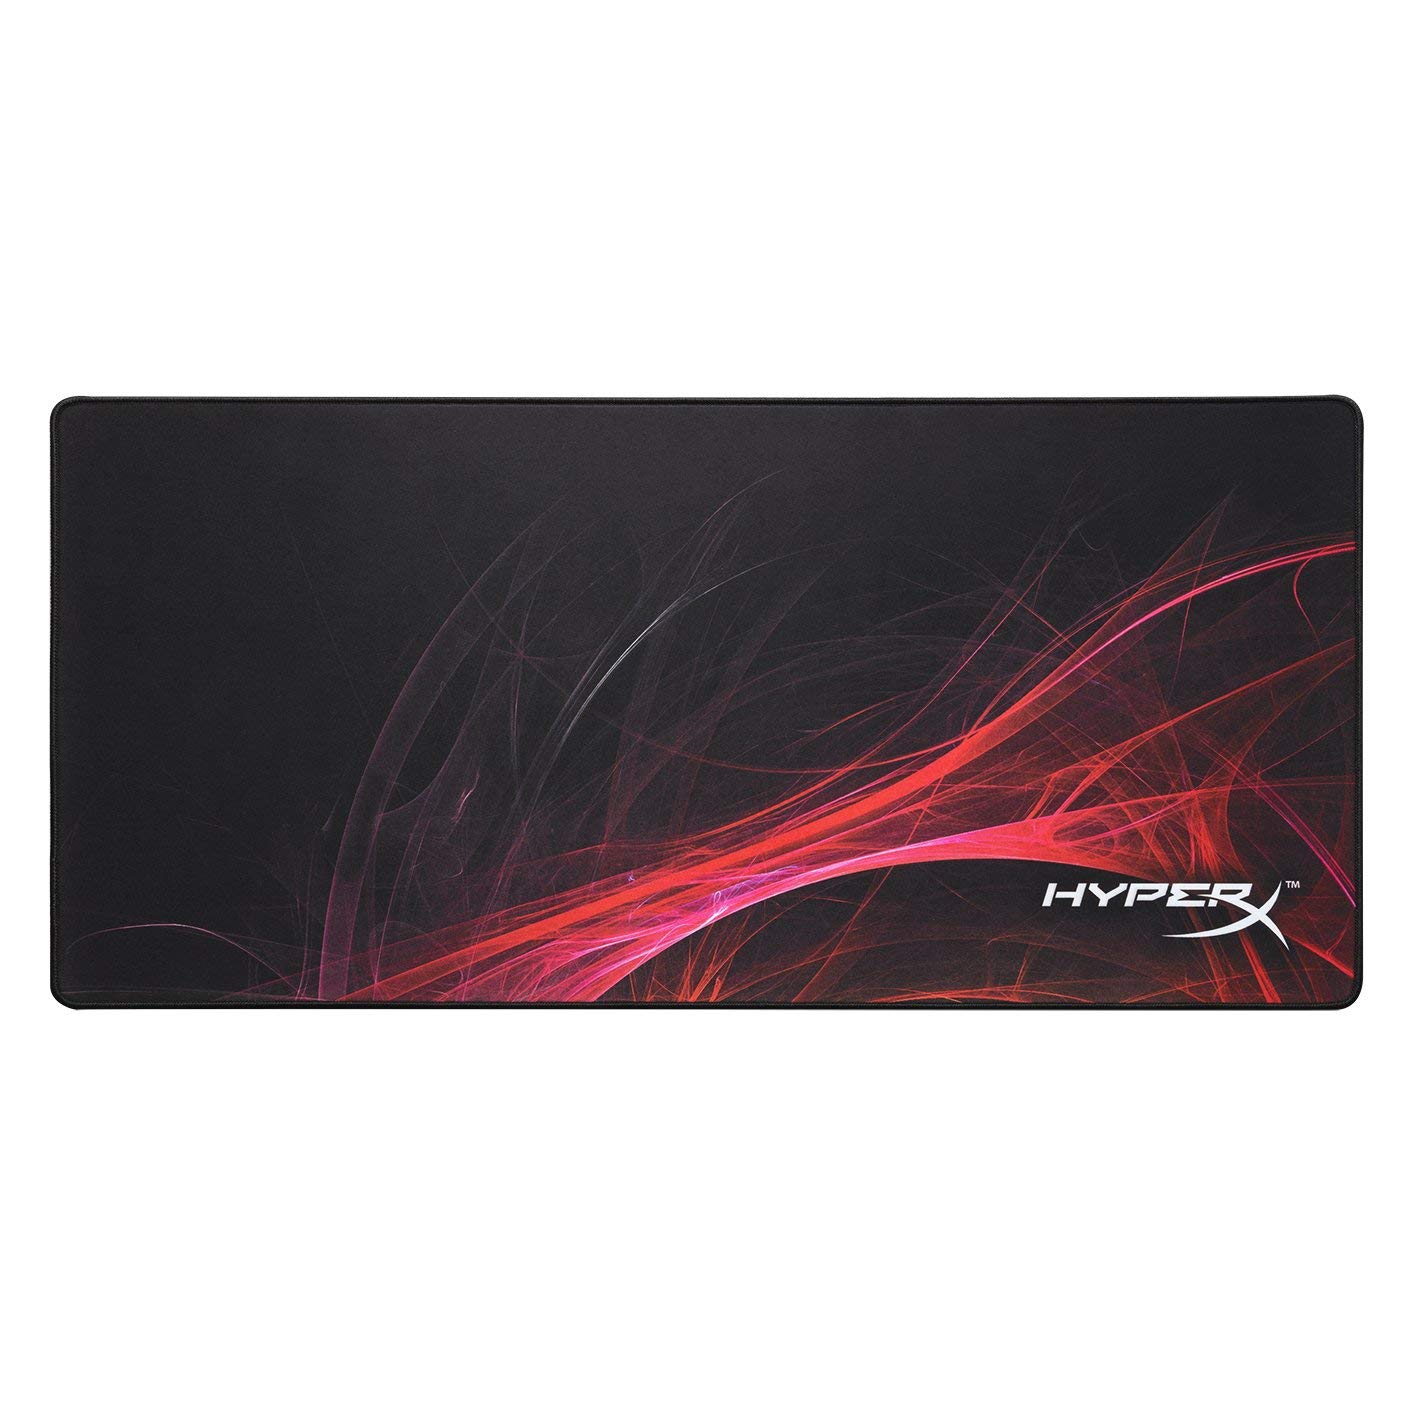 HyperX FURY S Speed Edition Gaming Mouse Pad (Extra Large) ของแท้ แผ่นรองเมาส์